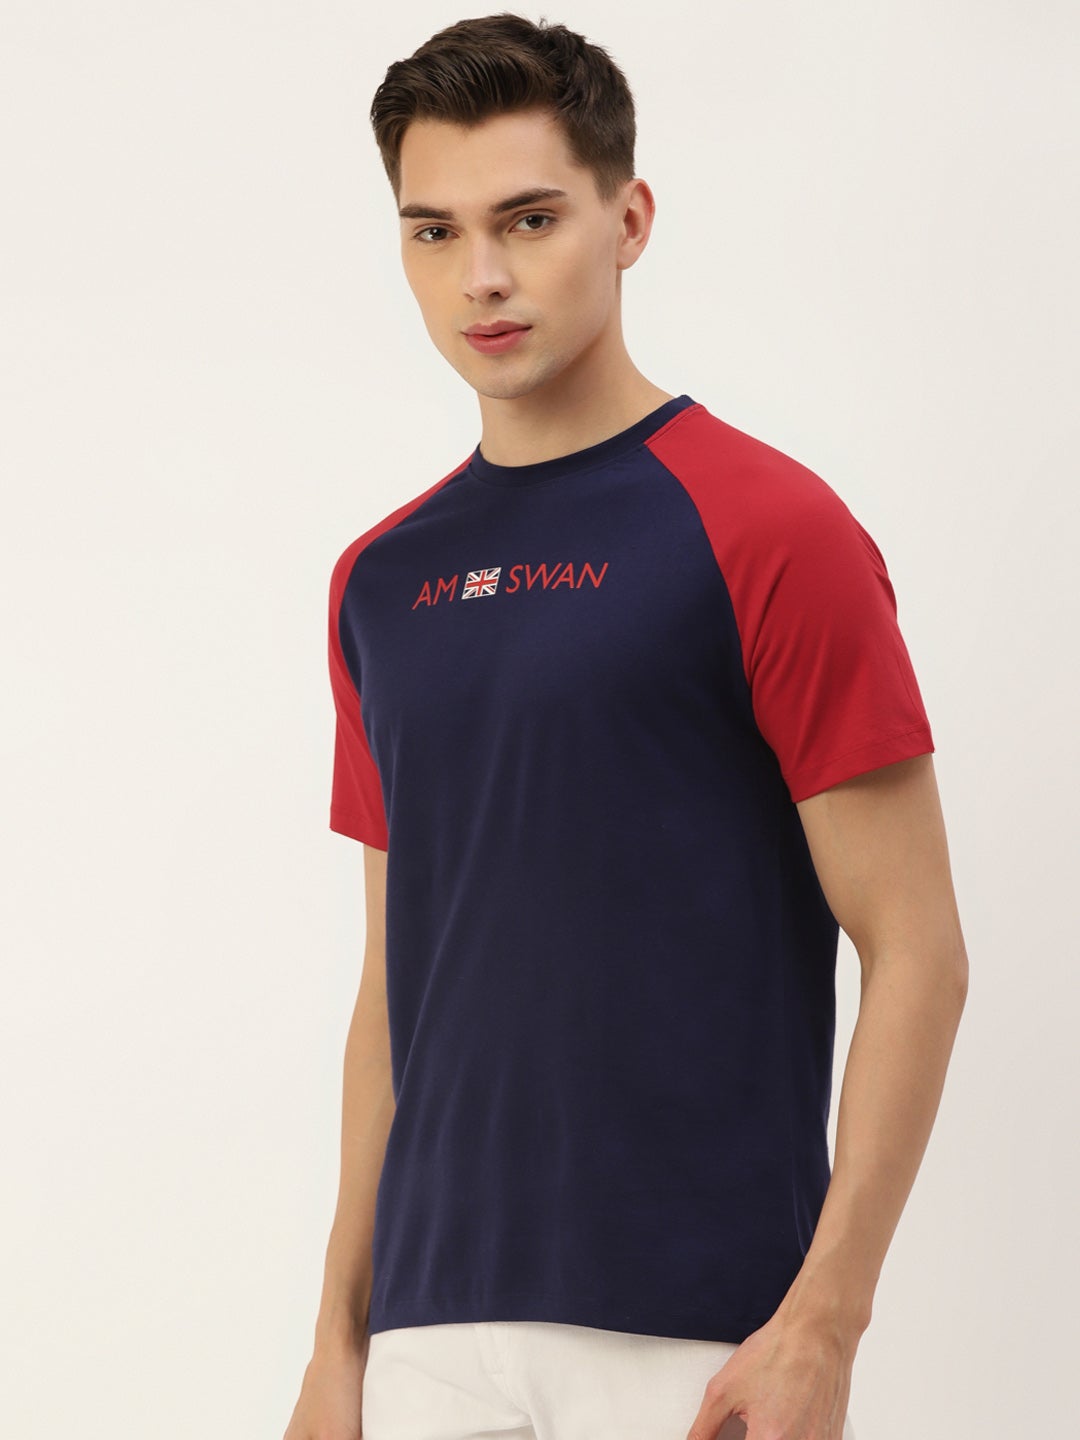 Men's Premium Cotton Printed Reglan Half Sleeve T-shirt